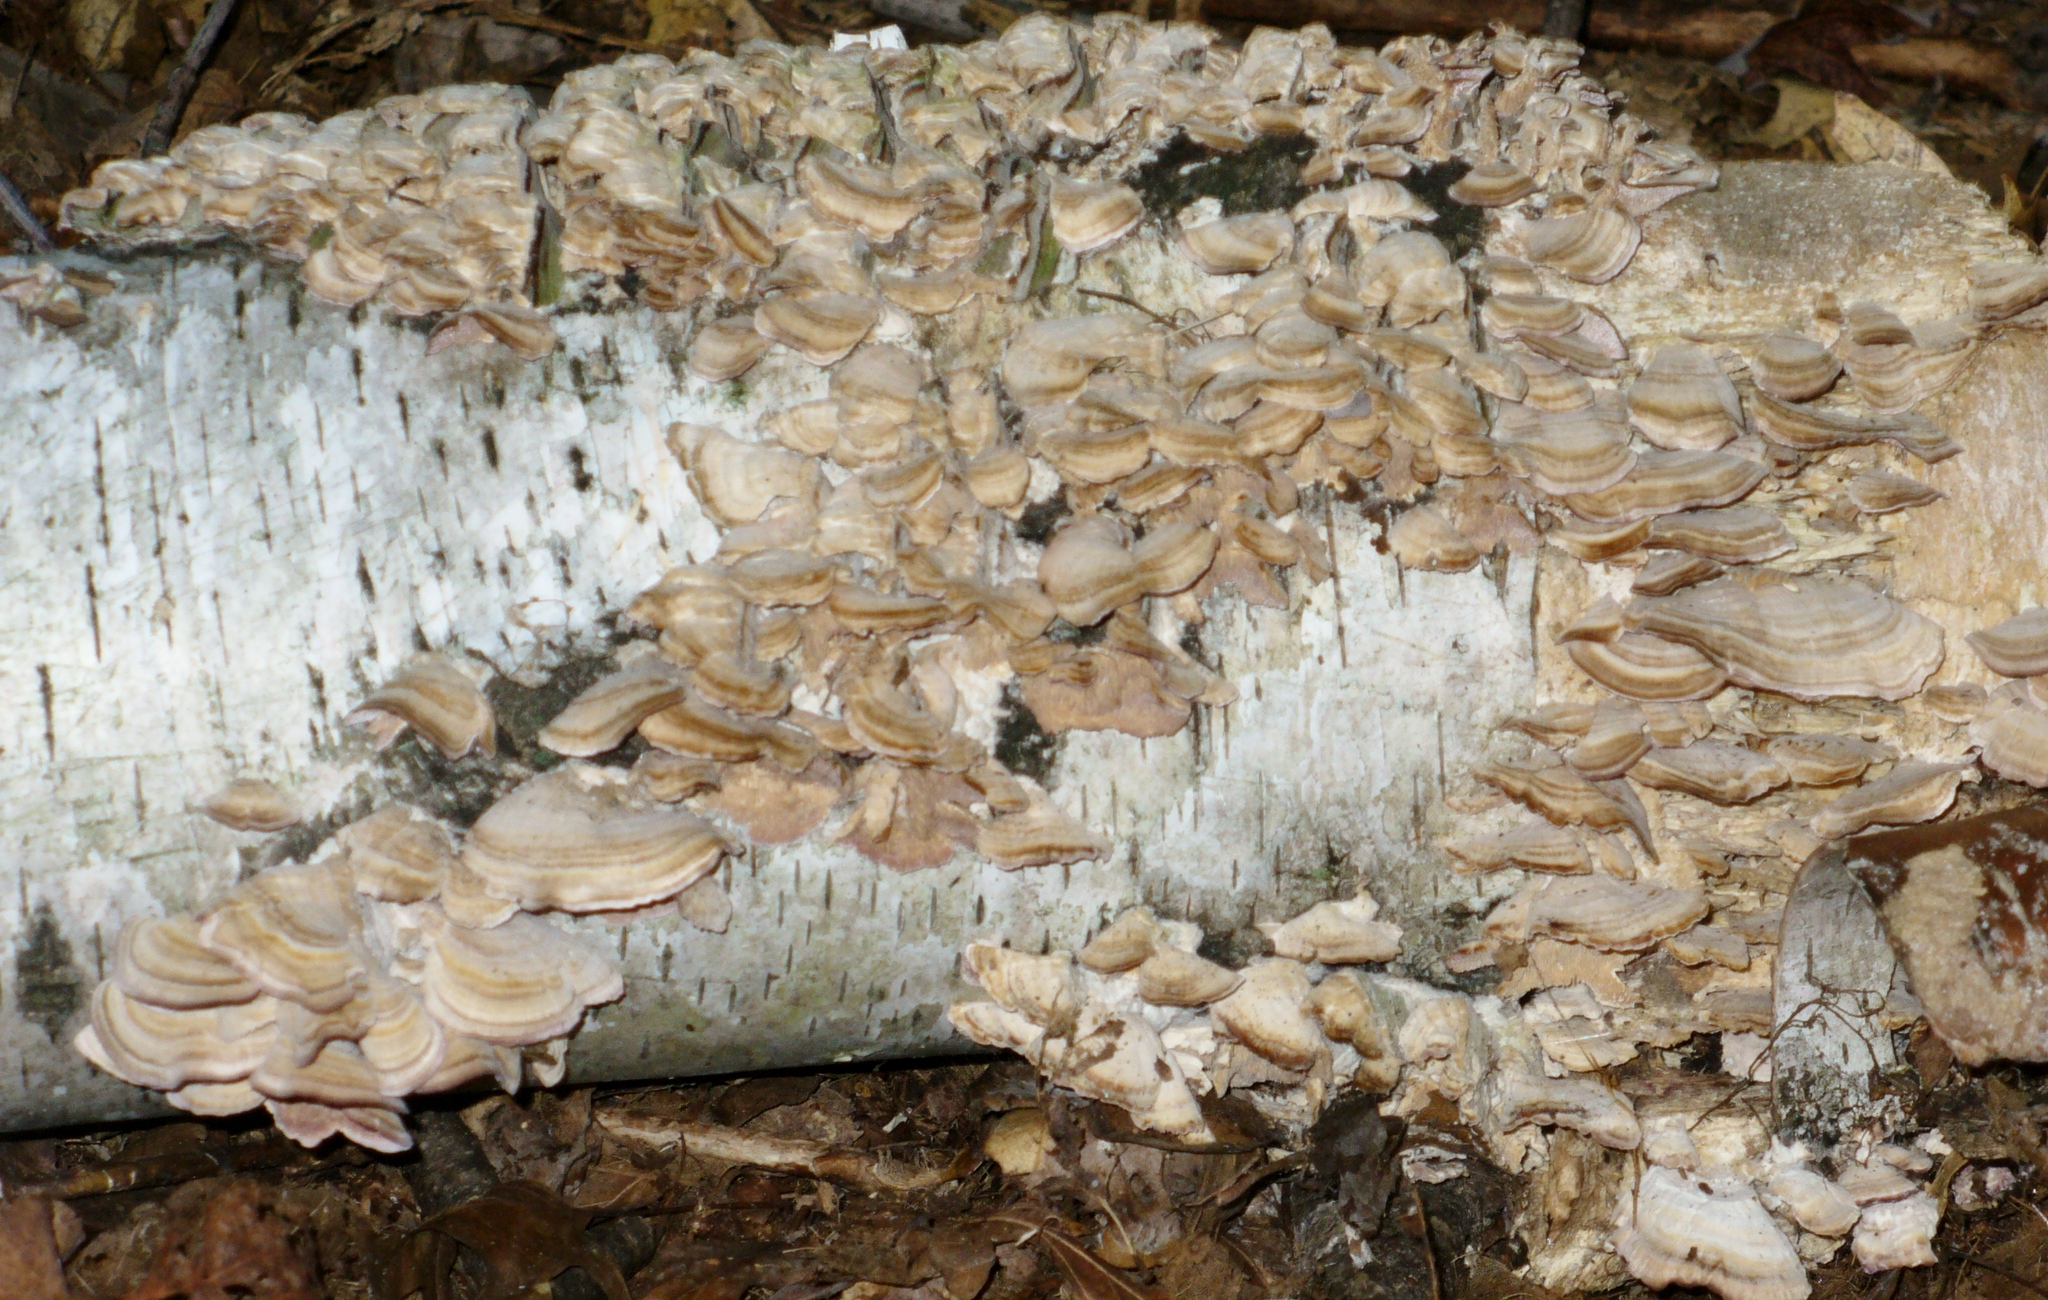 Fungus on Birch log